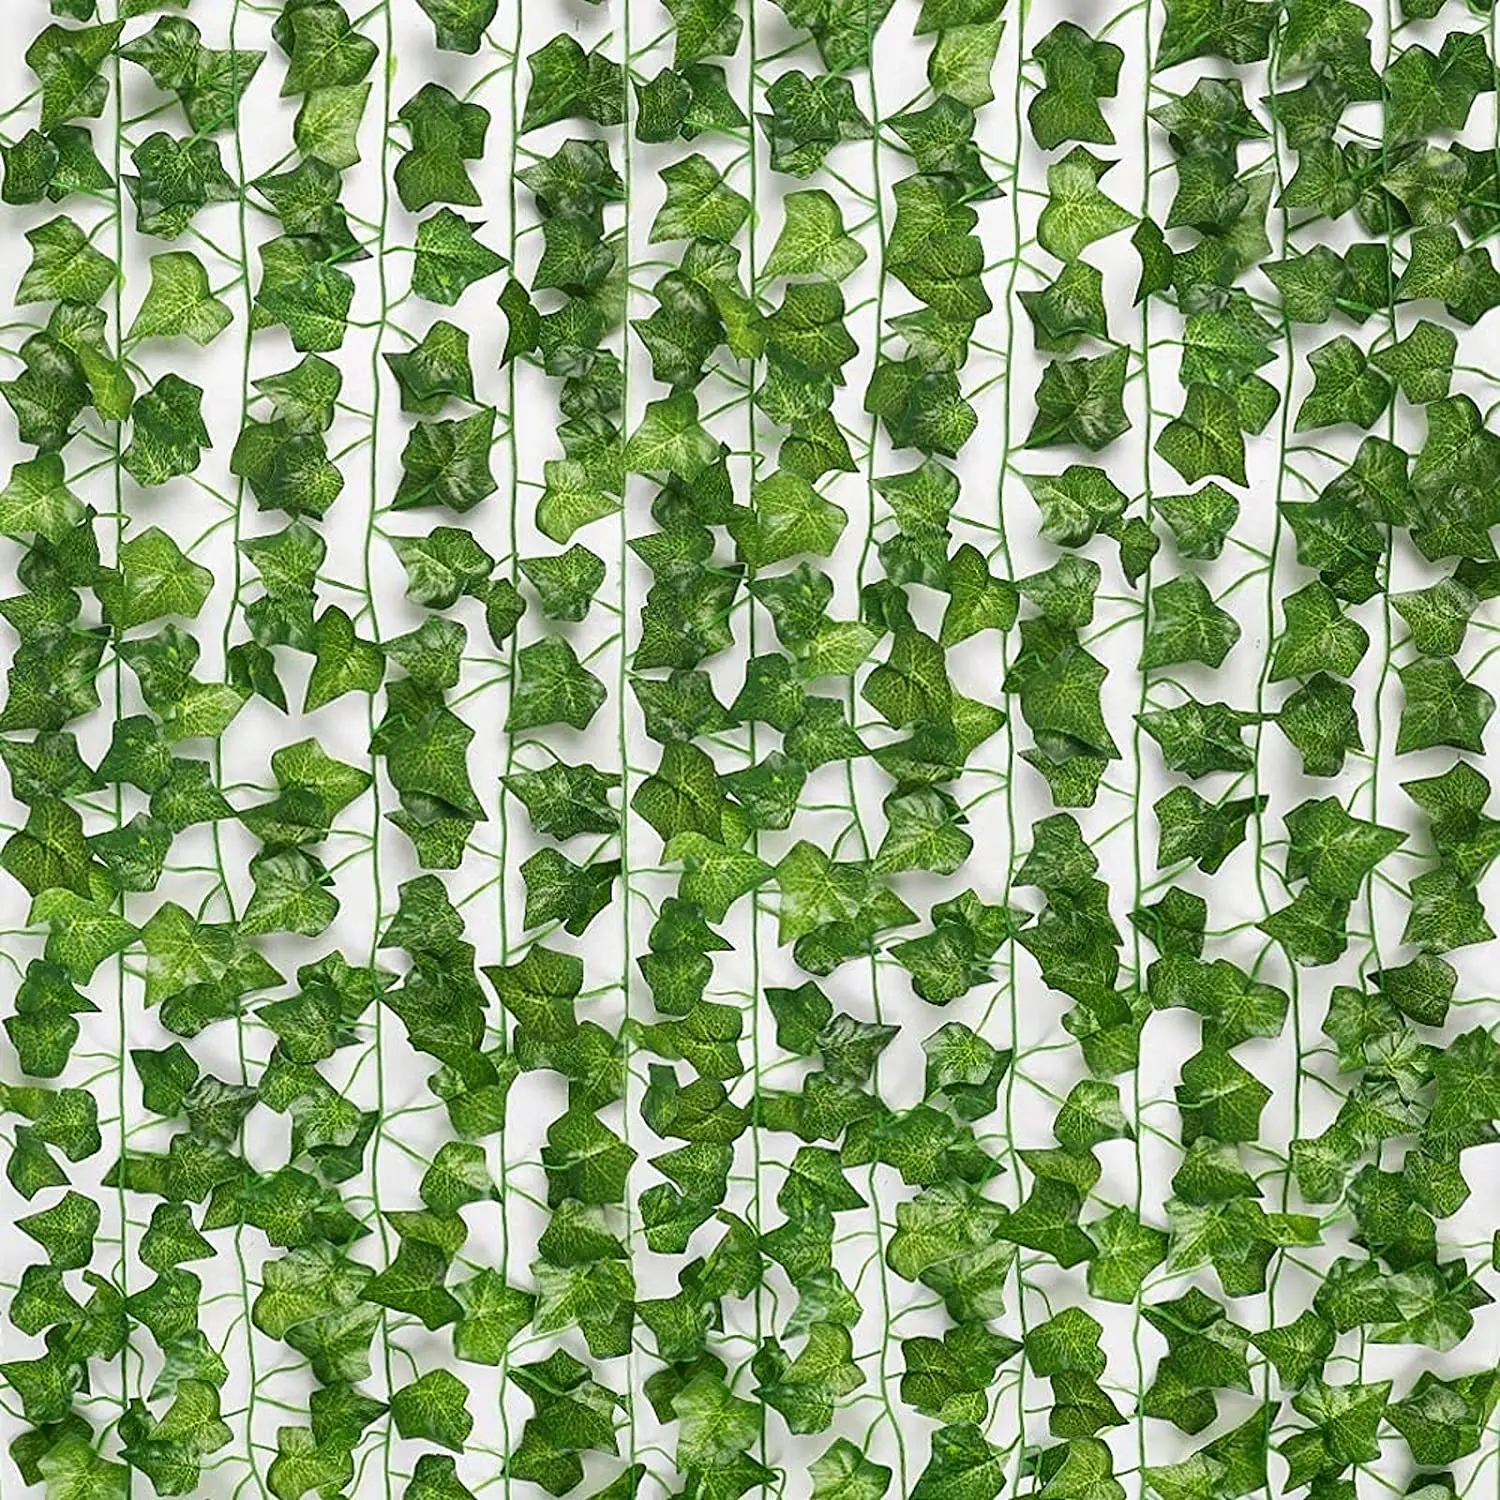 High-quality Artificial Ivy Leaf Plants Vine Hanging Garland Fake ...